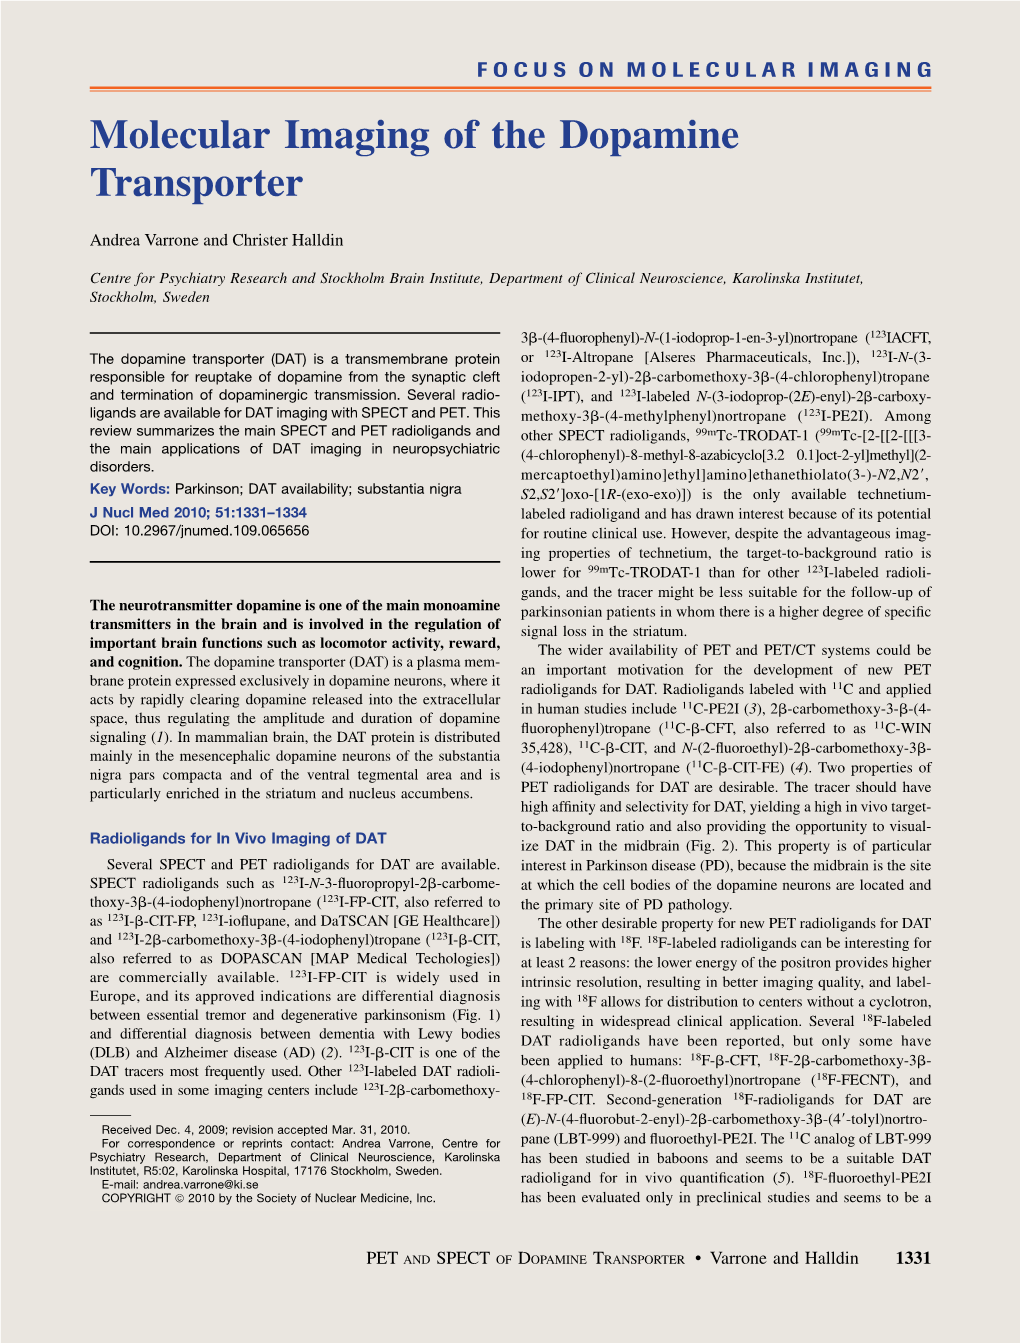 Molecular Imaging of the Dopamine Transporter